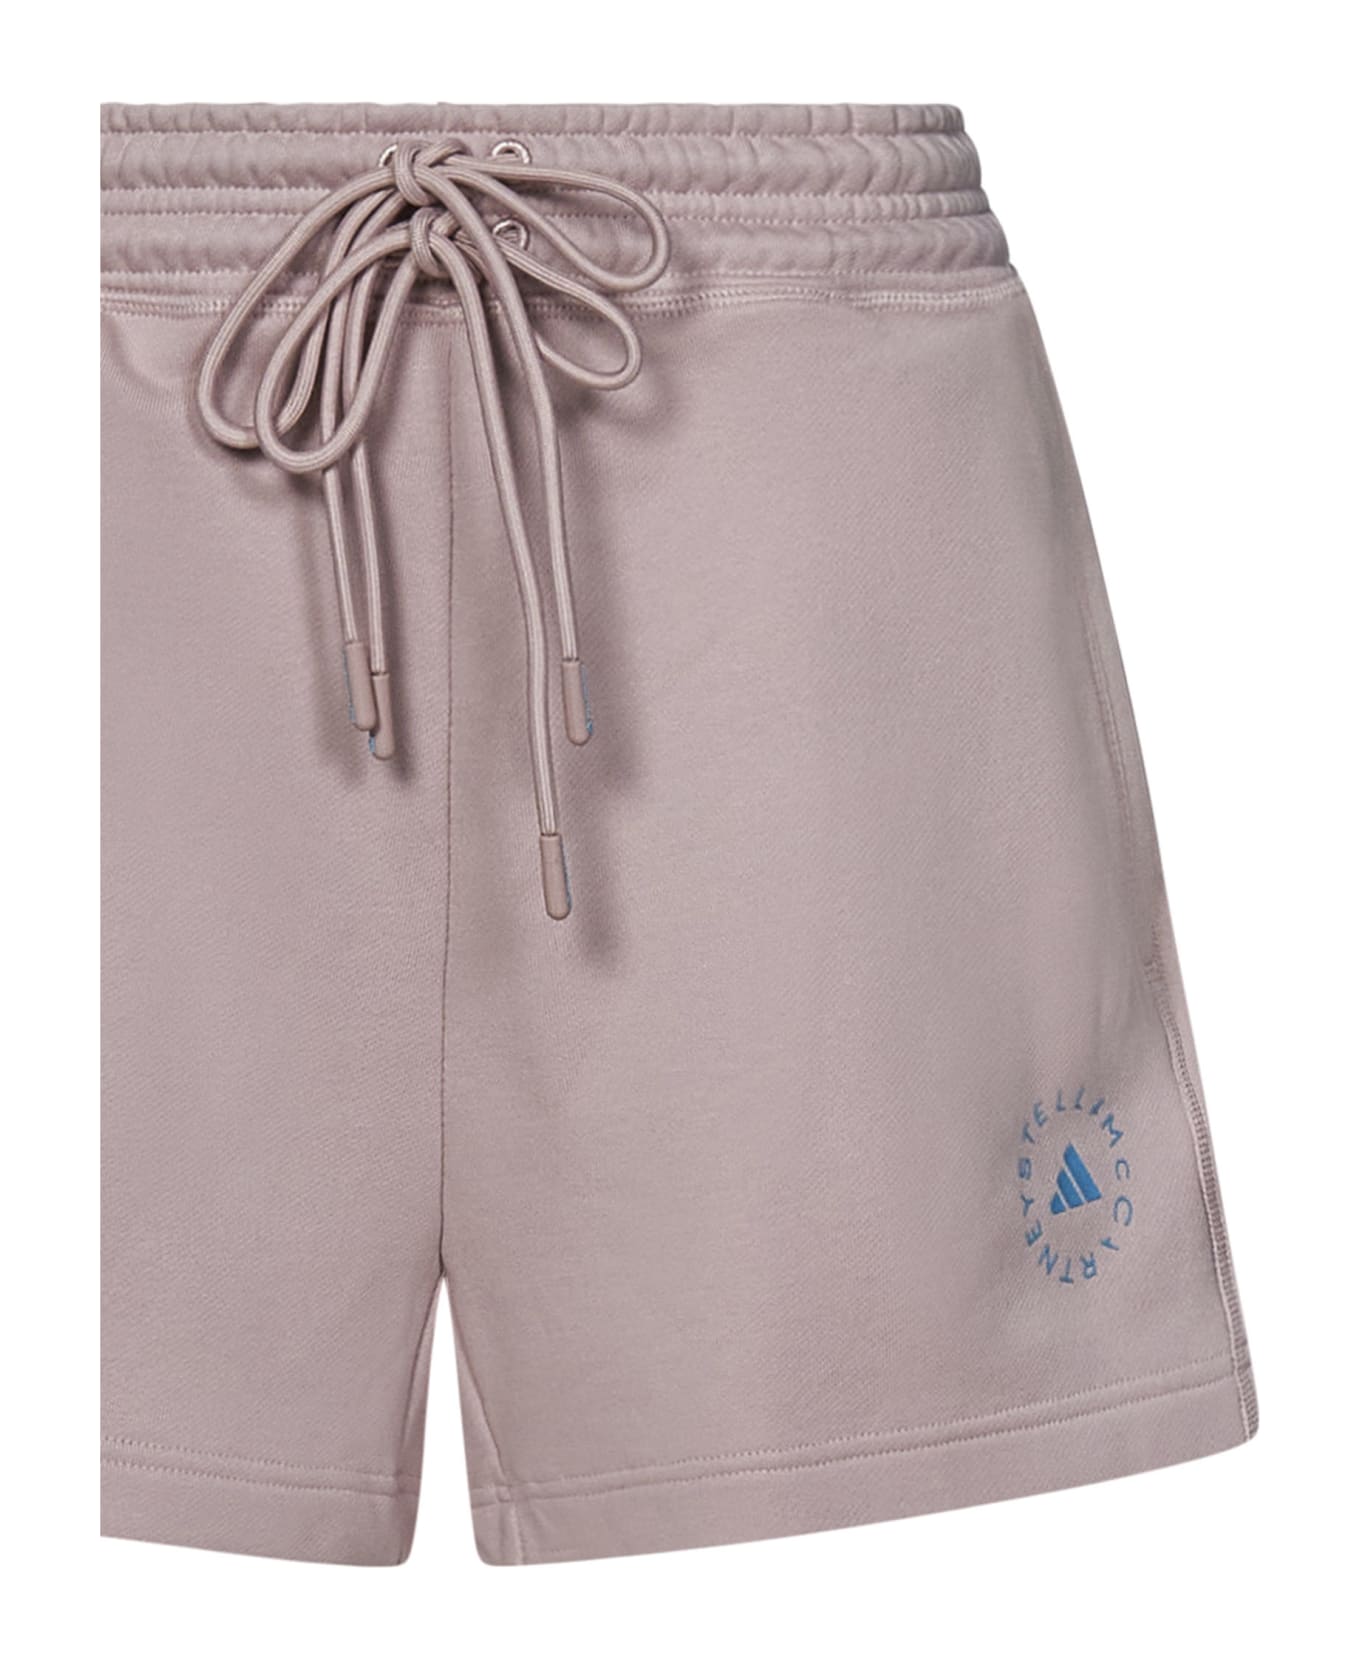 Adidas by Stella McCartney Shorts - Pink ショートパンツ